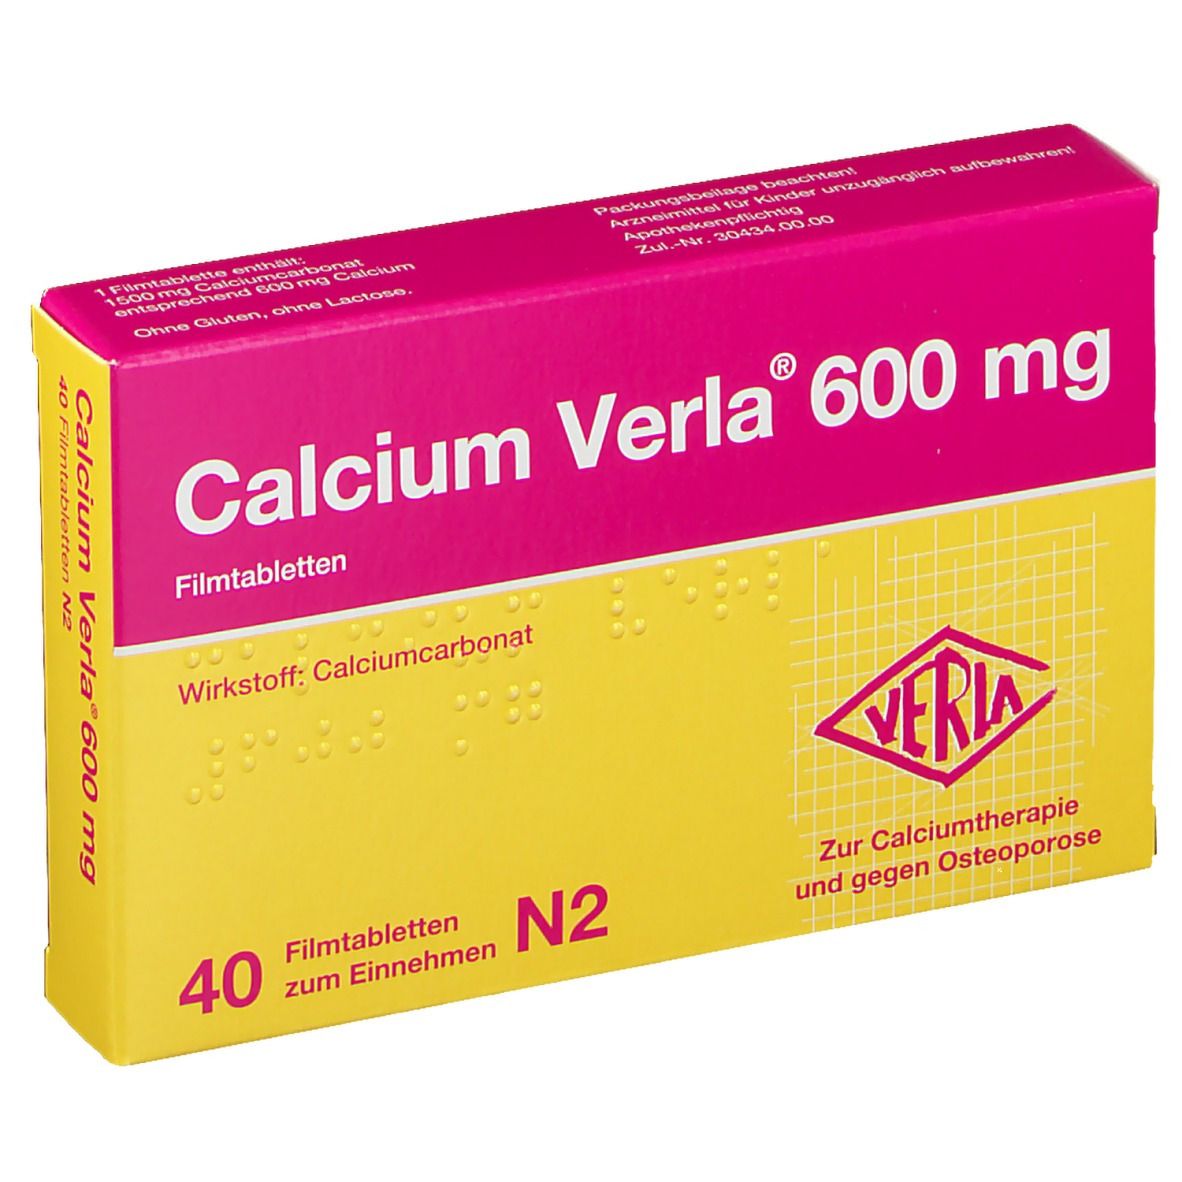 Calcium Verla® 600 mg Filmtabletten